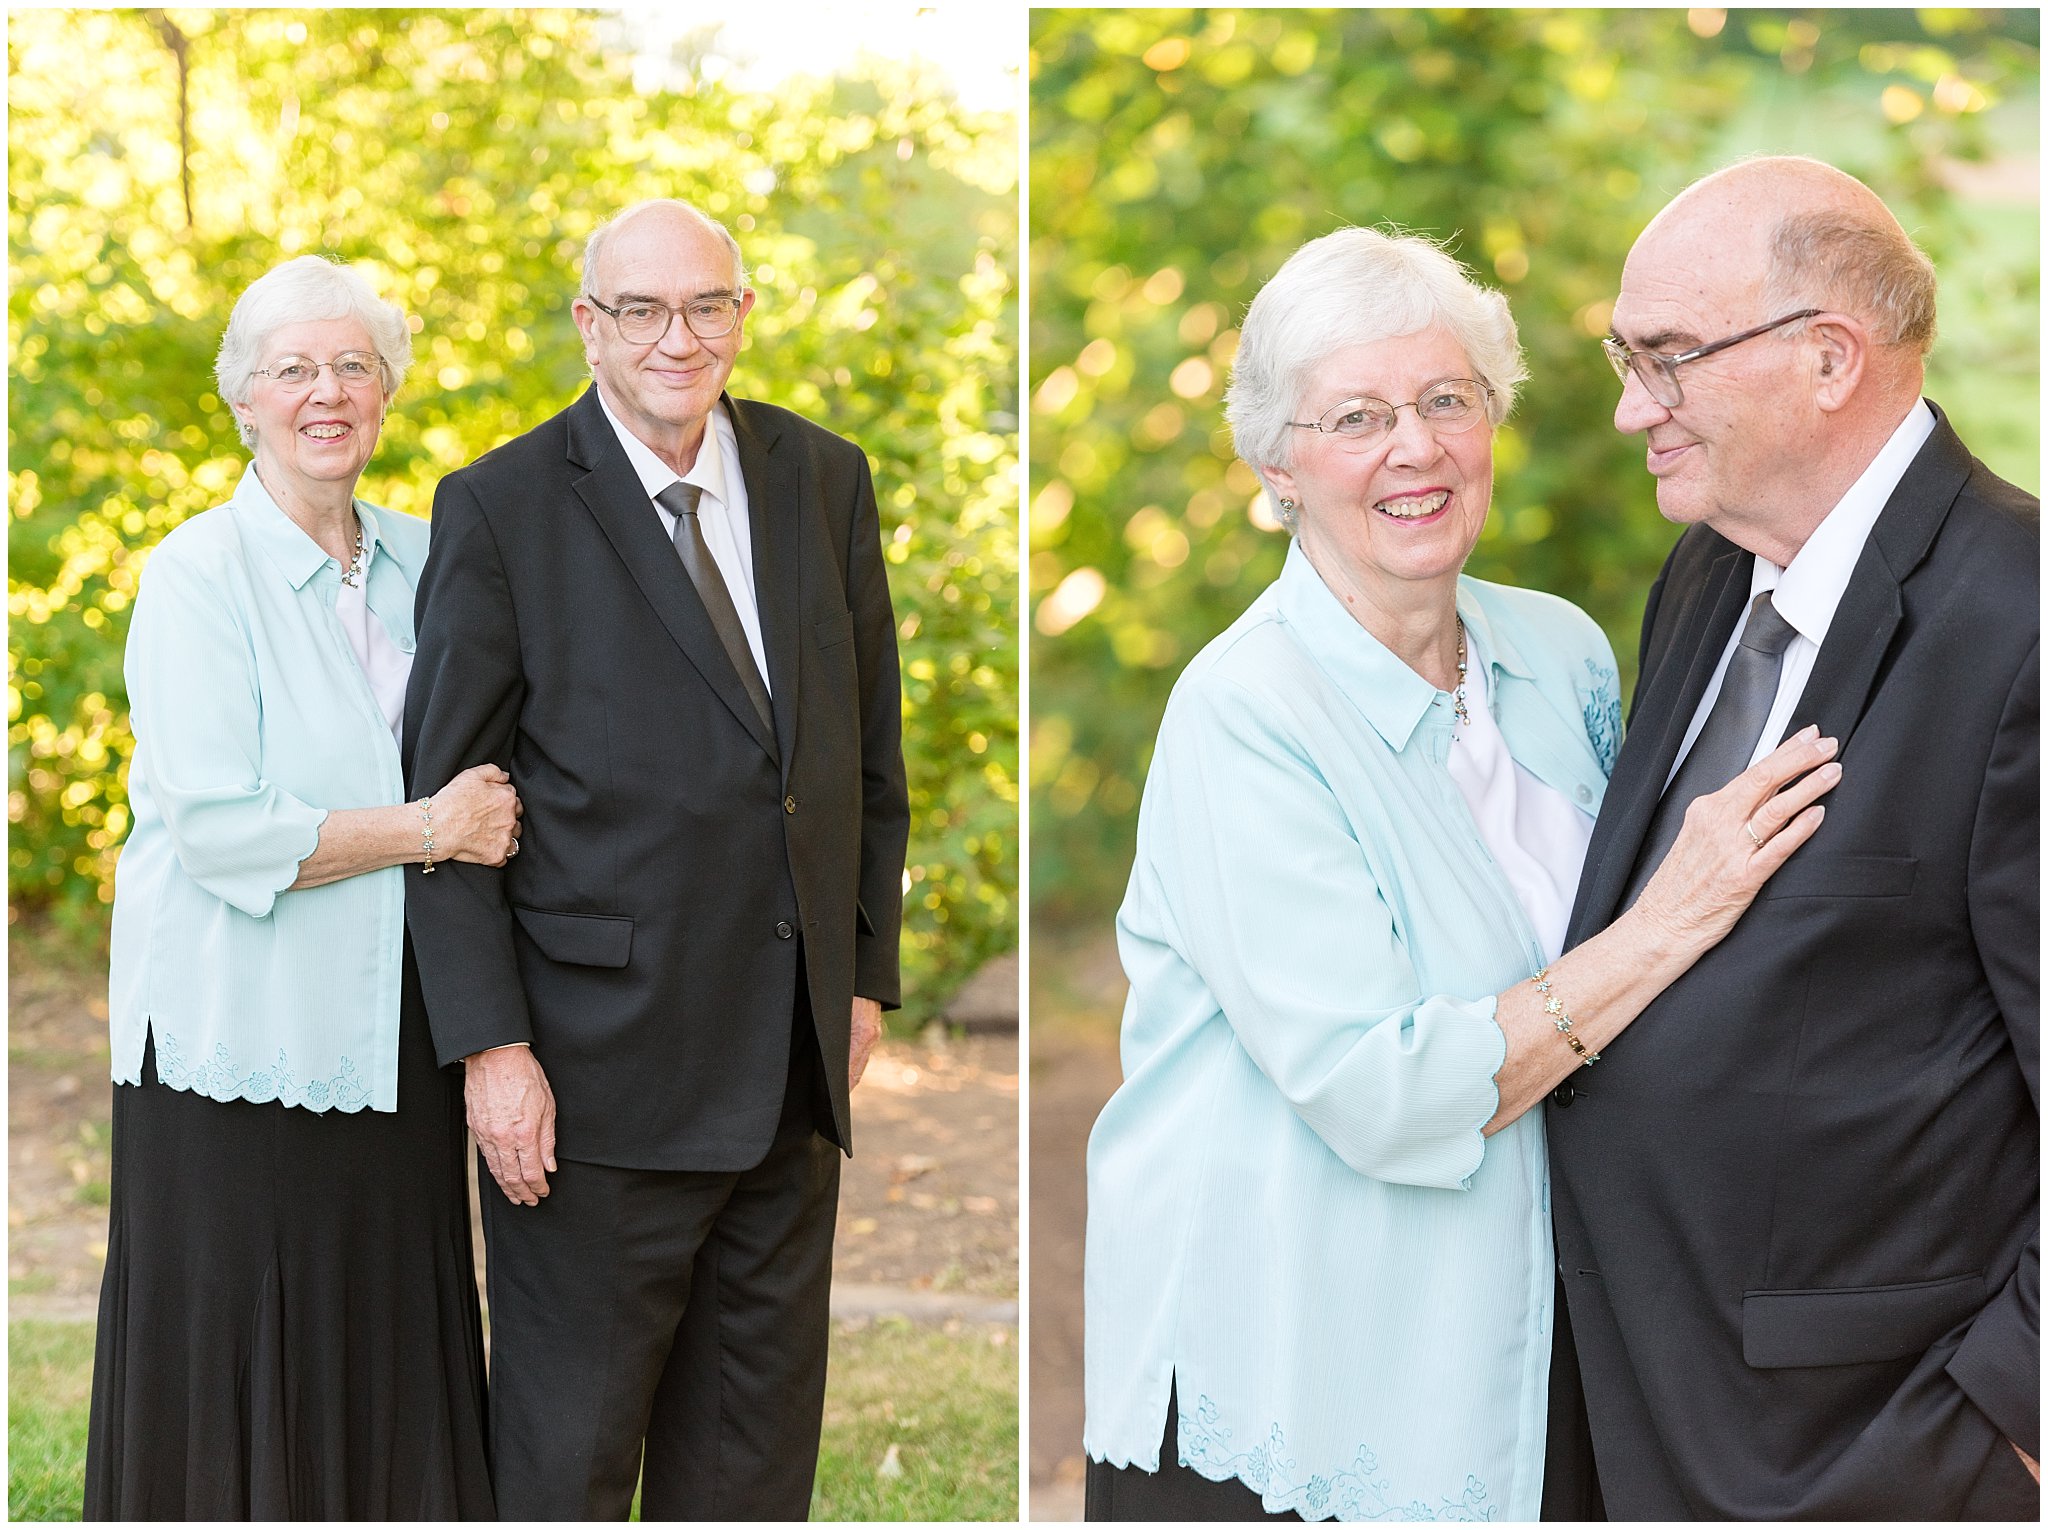 Grandpa admiring grandma at photoshoot | Layton Commons Park | Layton Couples Photographer | Jessie and Dallin